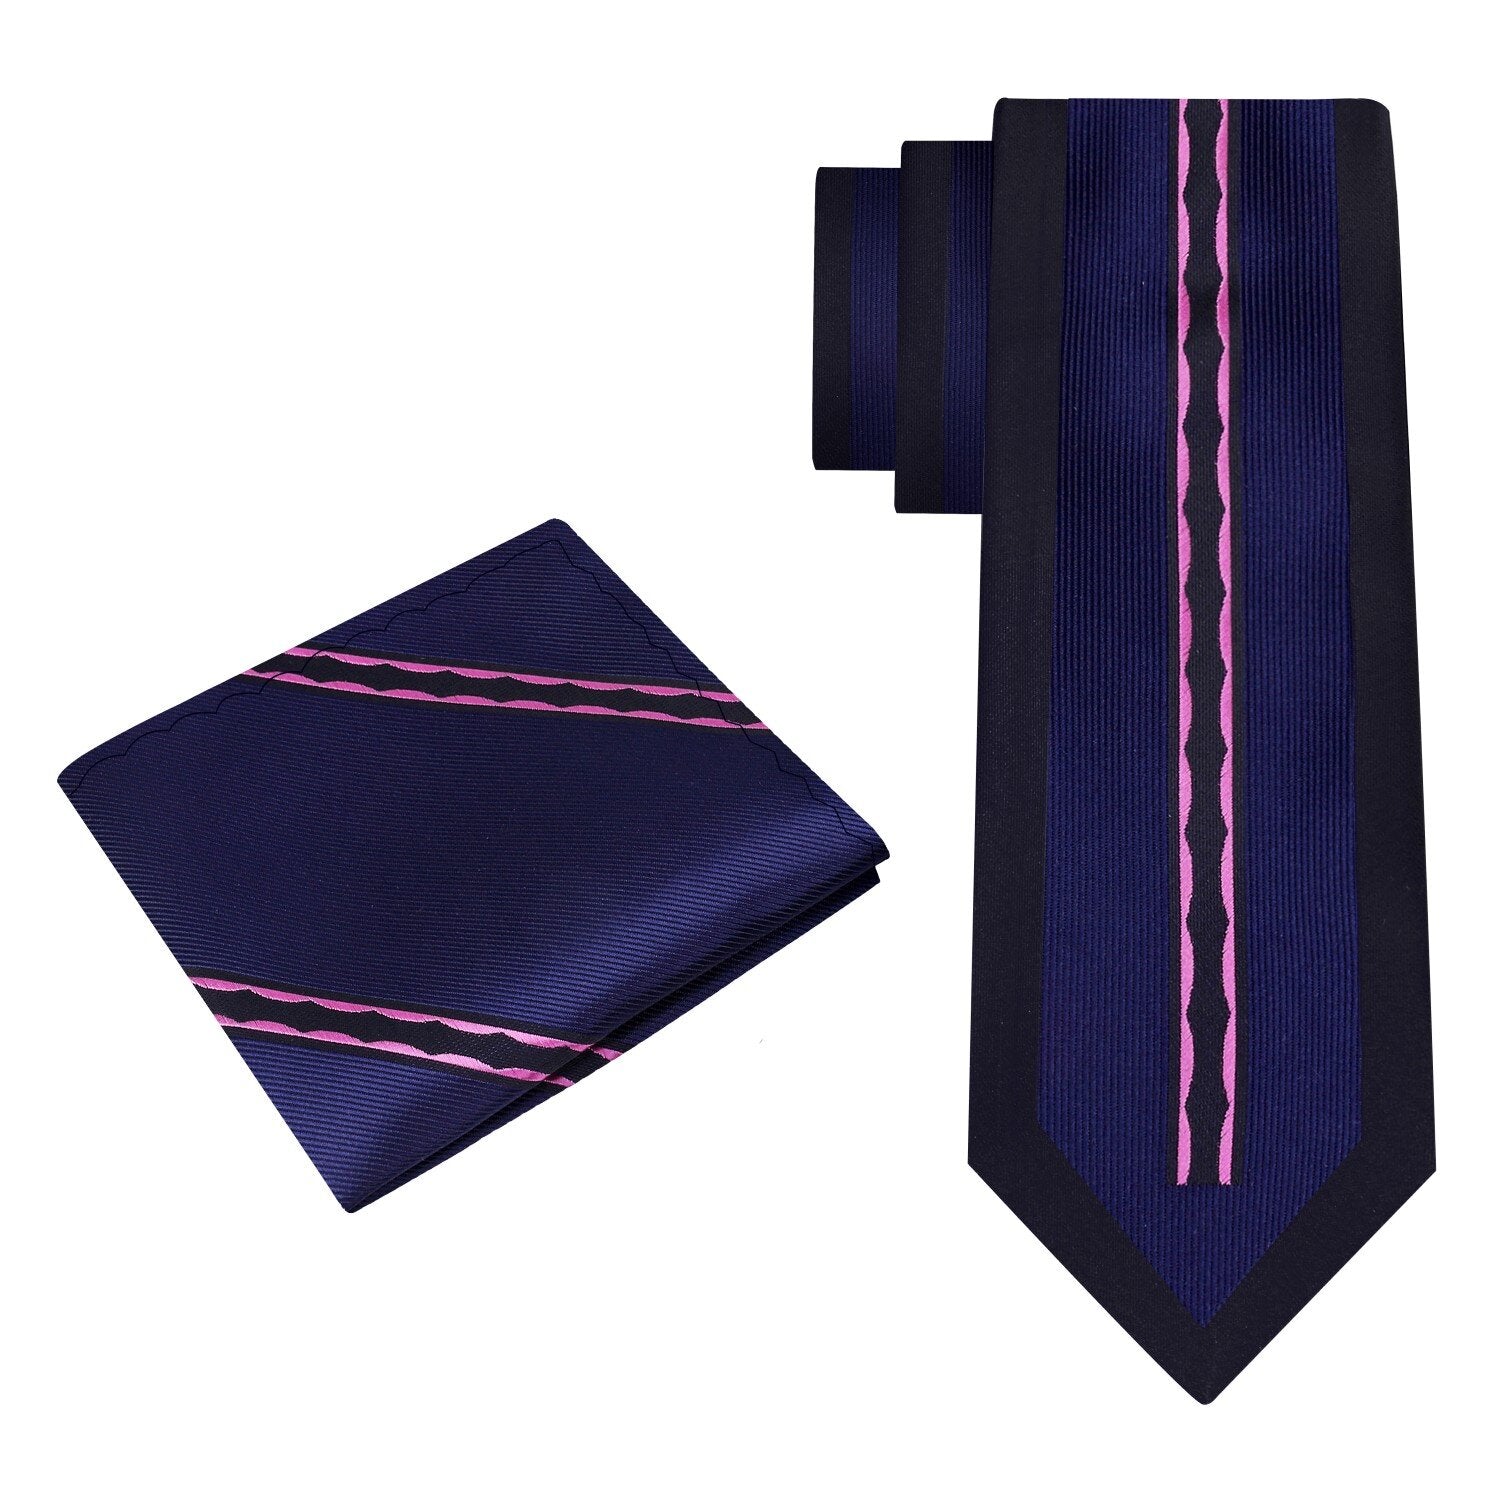 Alt View: Black, Blue, Purple Waved Lines Tie and Square